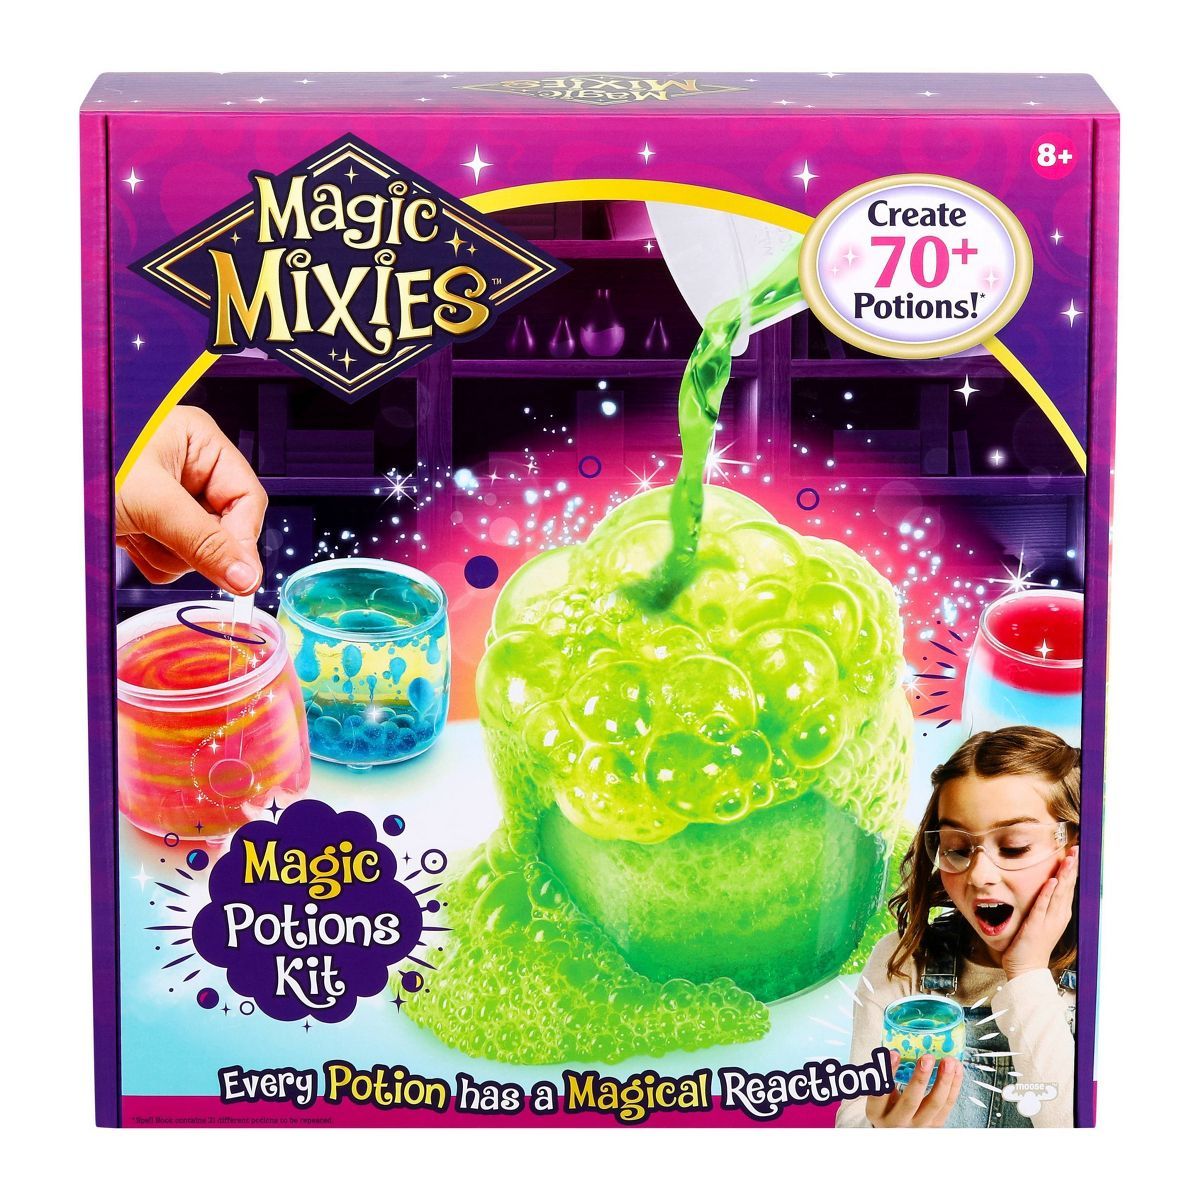 Magic Mixies Magic Potions Kit | Target